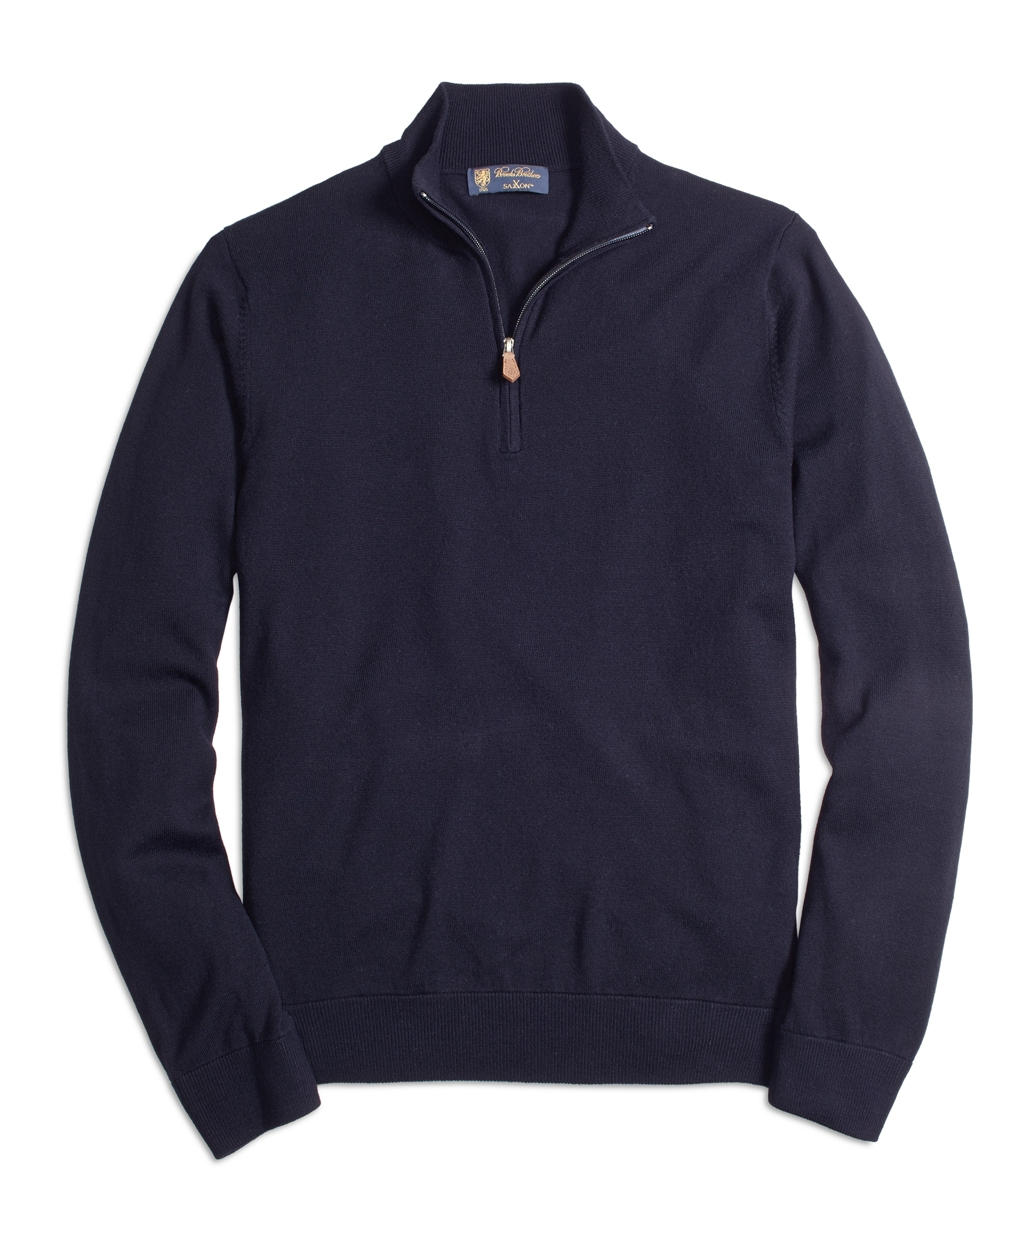 Brooks Brothers Saxxon Wool Half-zip Sweater in Navy (Blue) for Men - Lyst